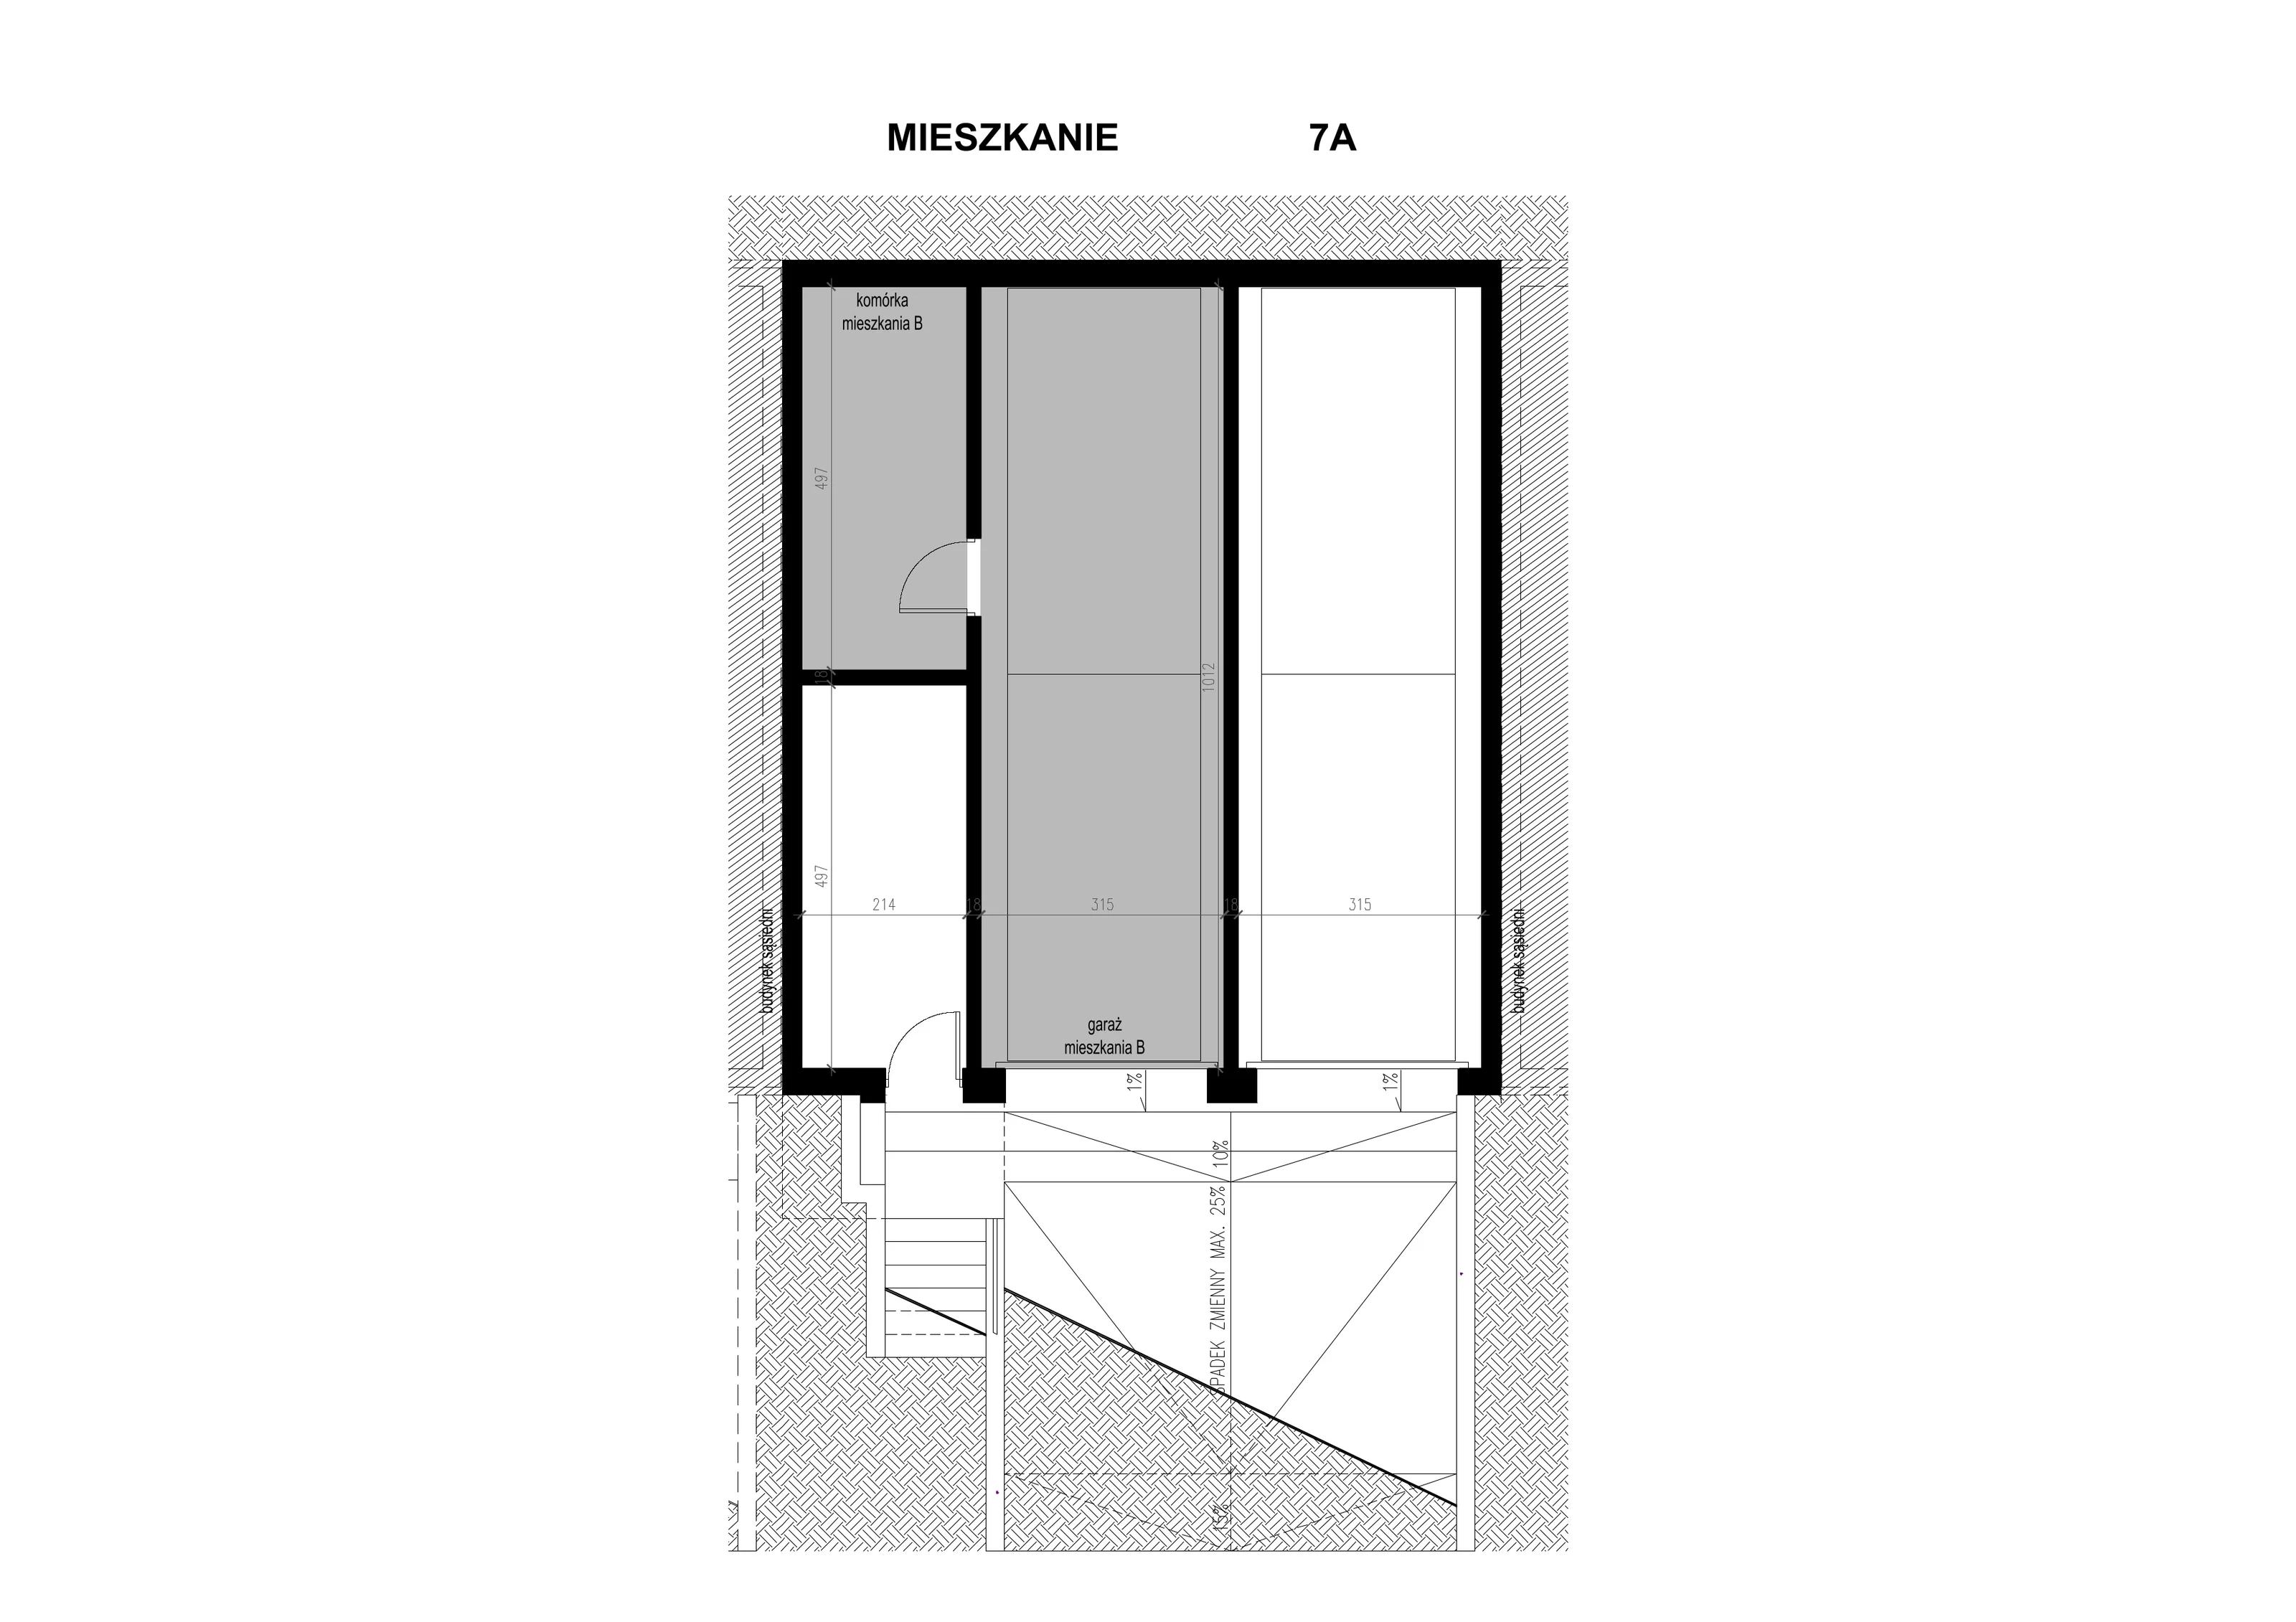 Apartament 80,15 m², parter, oferta nr 1.7A, Osiedle BO, Wrocław, Kowale, ul. Bociana